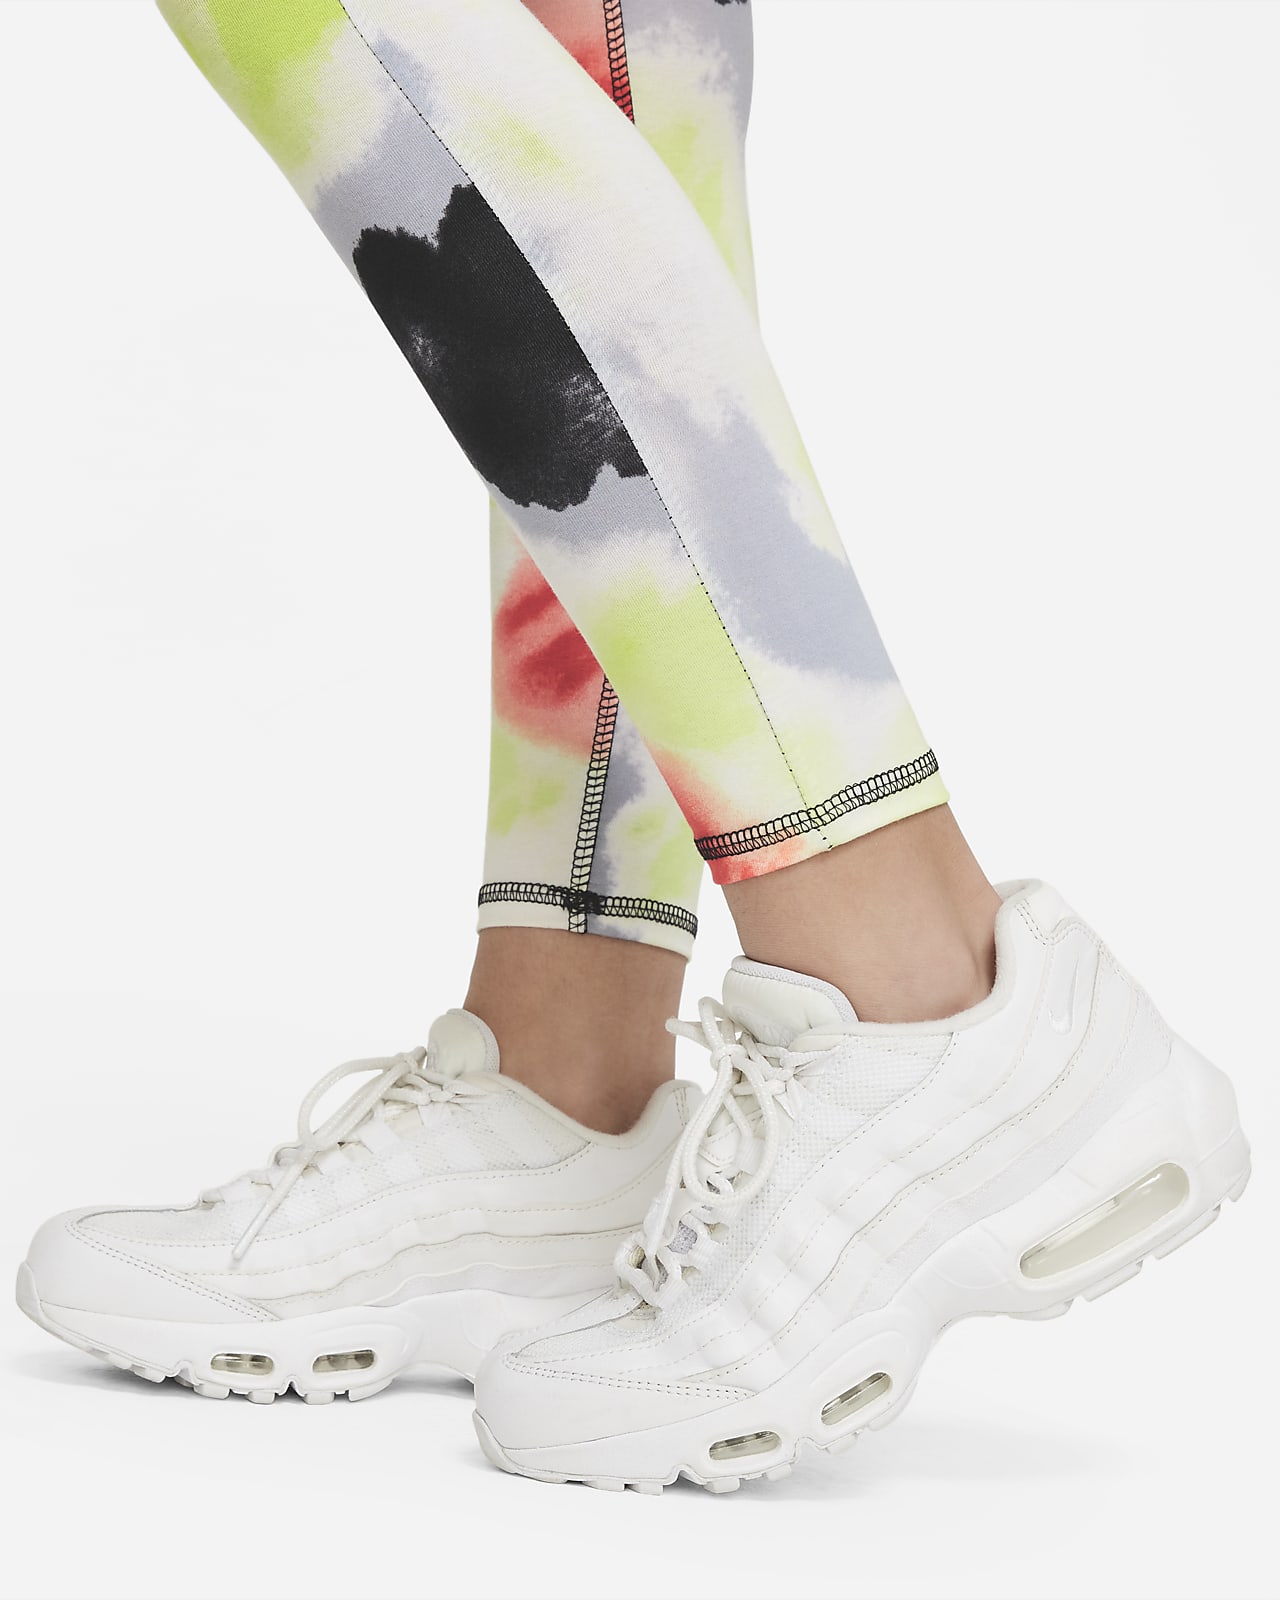 Nike Sportswear Favorites Big Kids' (Girls') Tie-Dye Leggings